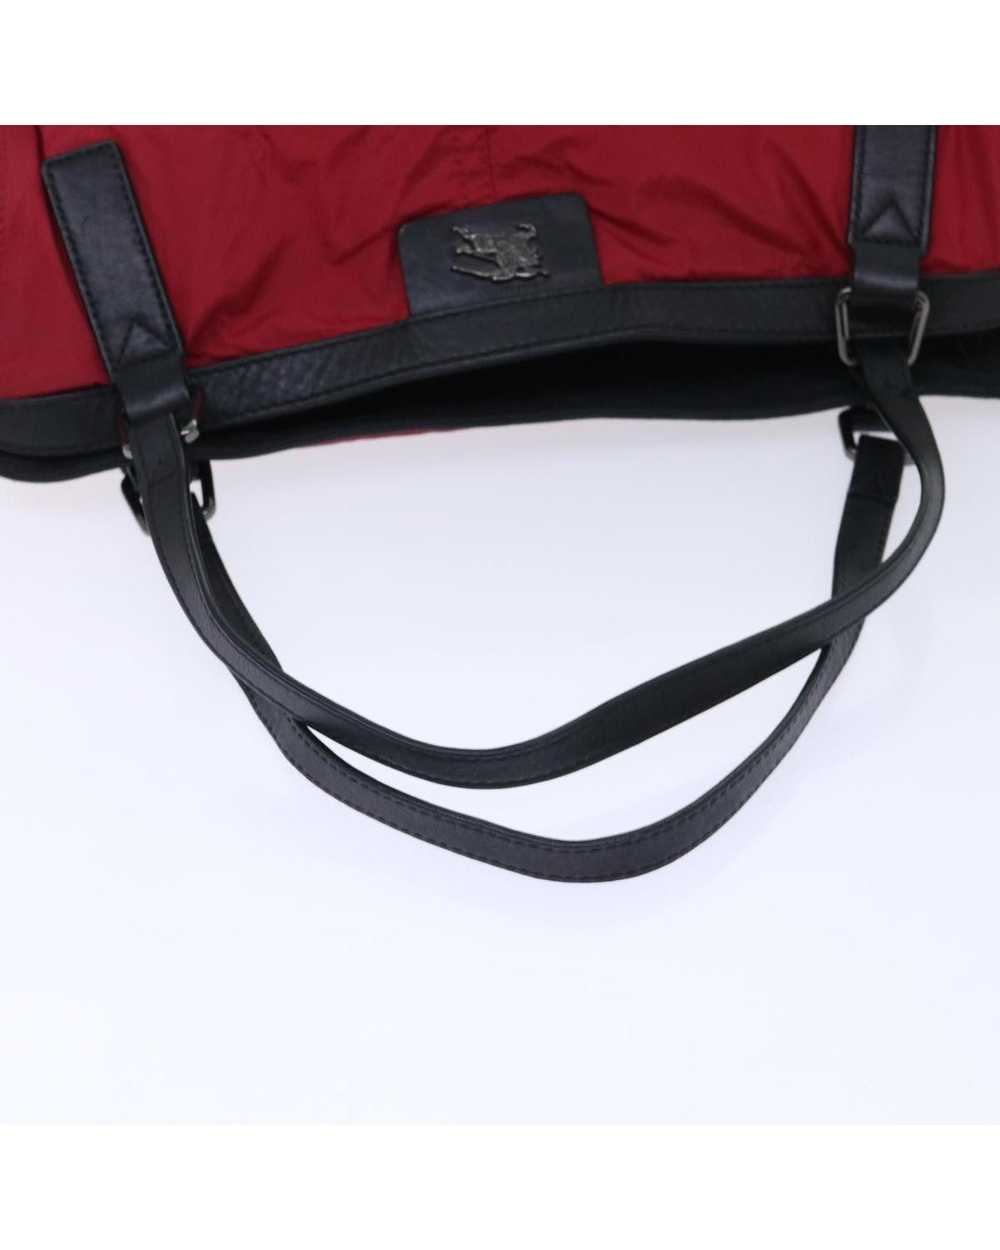 Burberry Red Nylon Leather Shoulder Bag - image 7